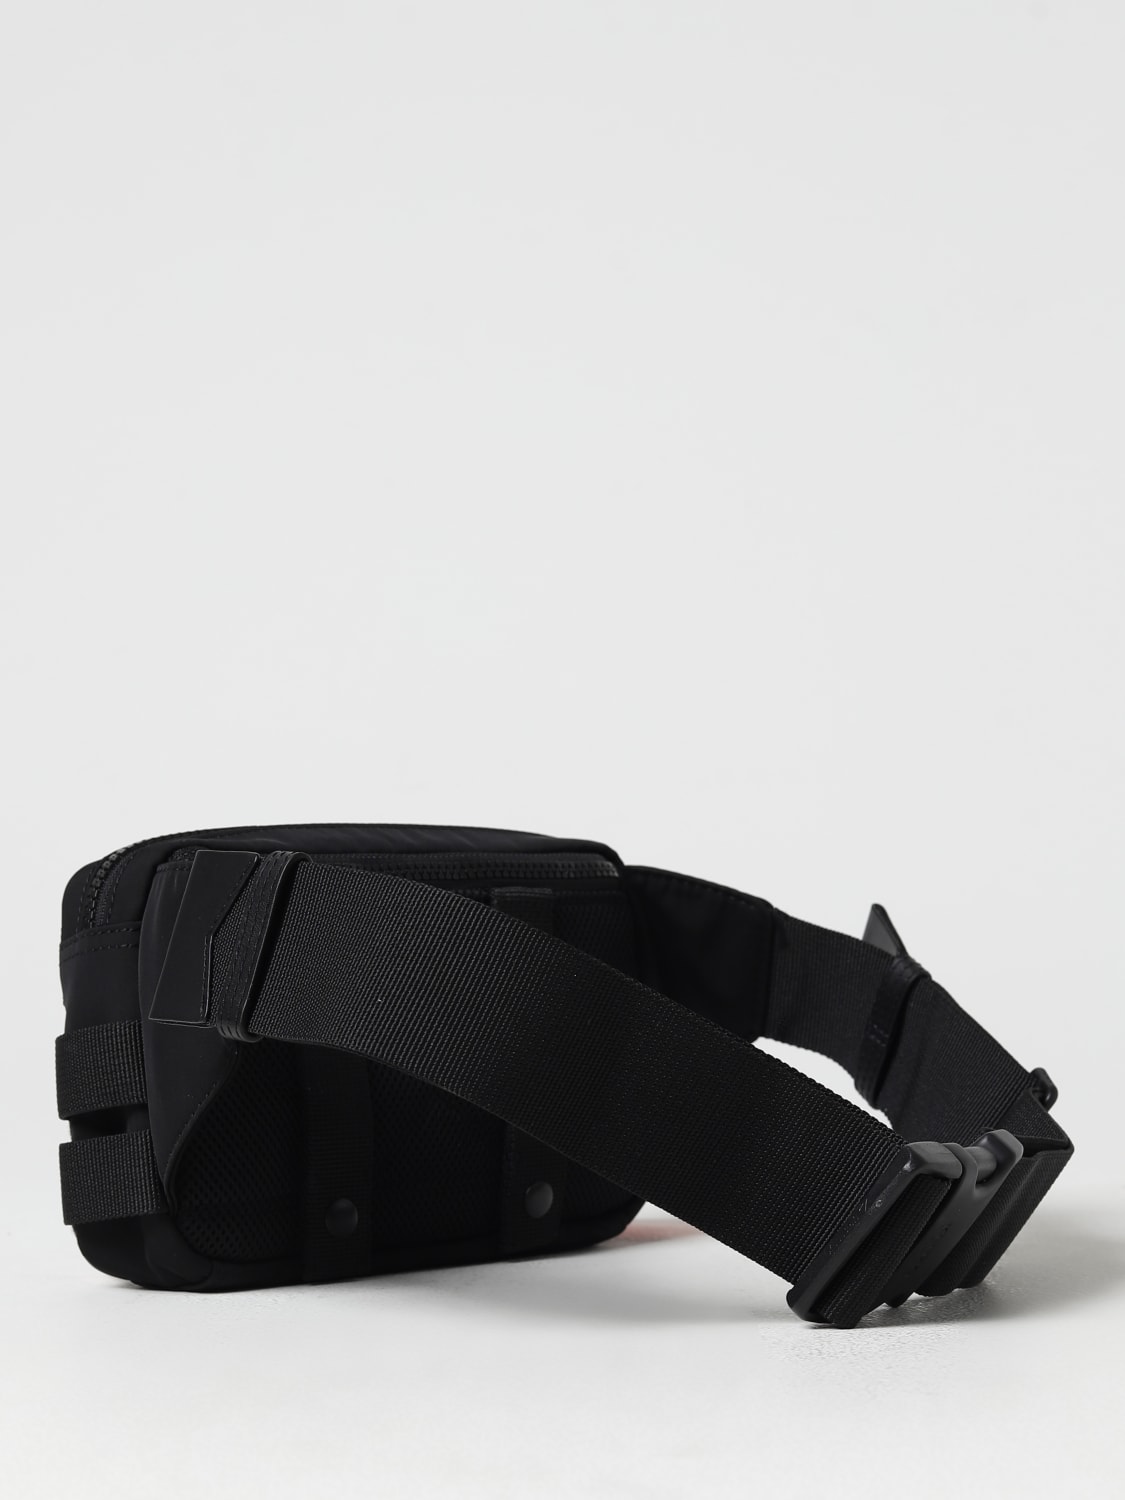 KENZO: Jungle bum bag in nylon with patch - Black | Kenzo belt bag ...